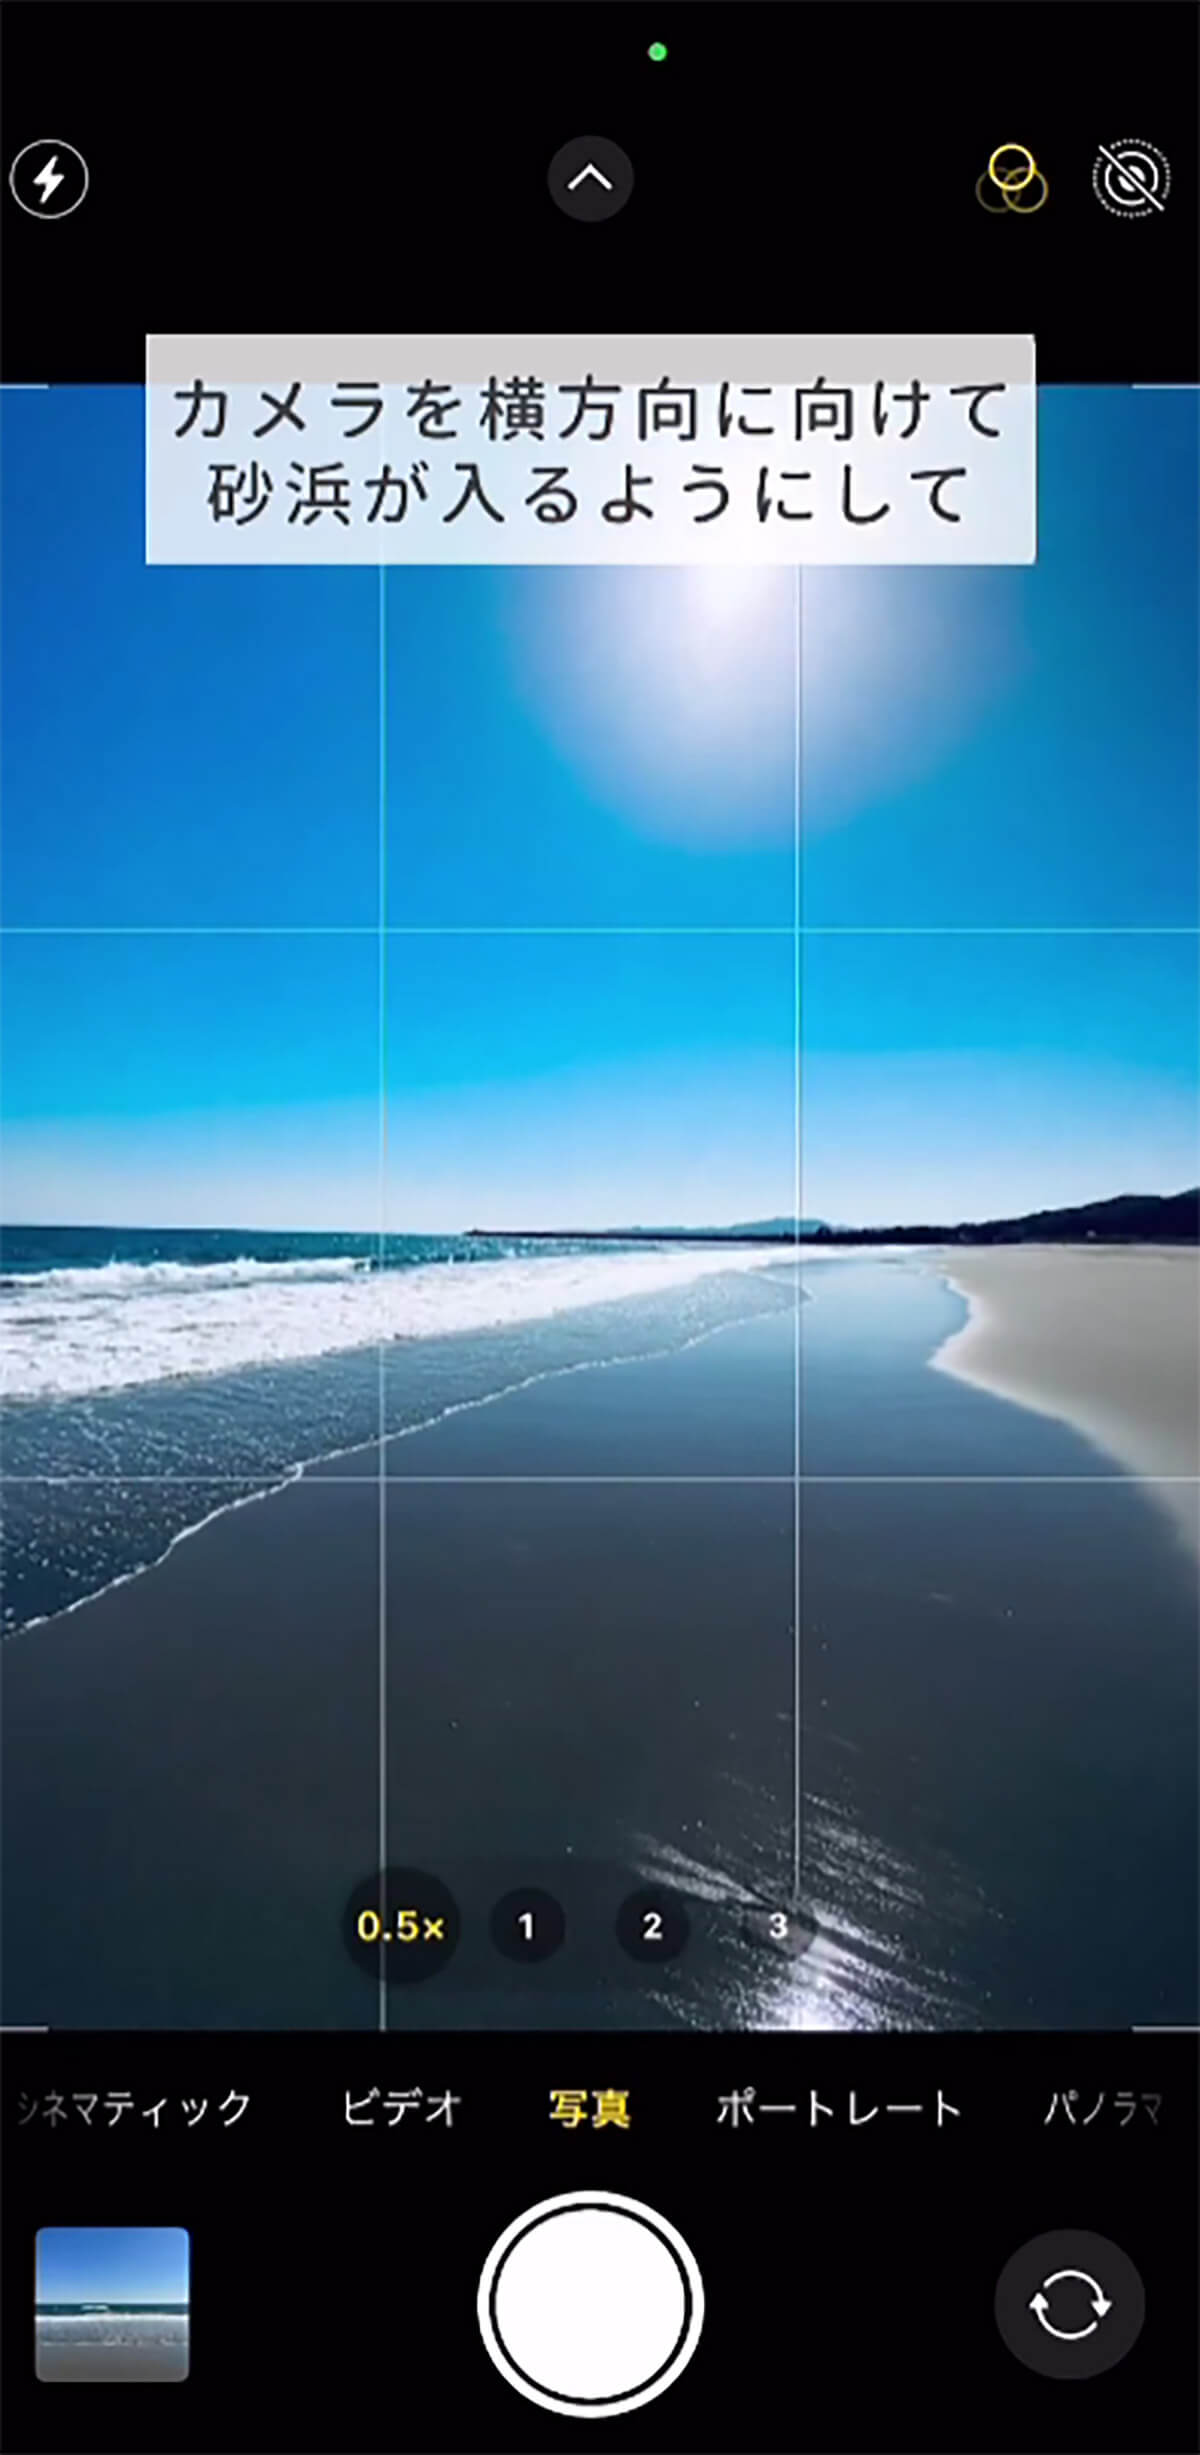 iPhoneで海の写真をダイナミックに撮影する方法4